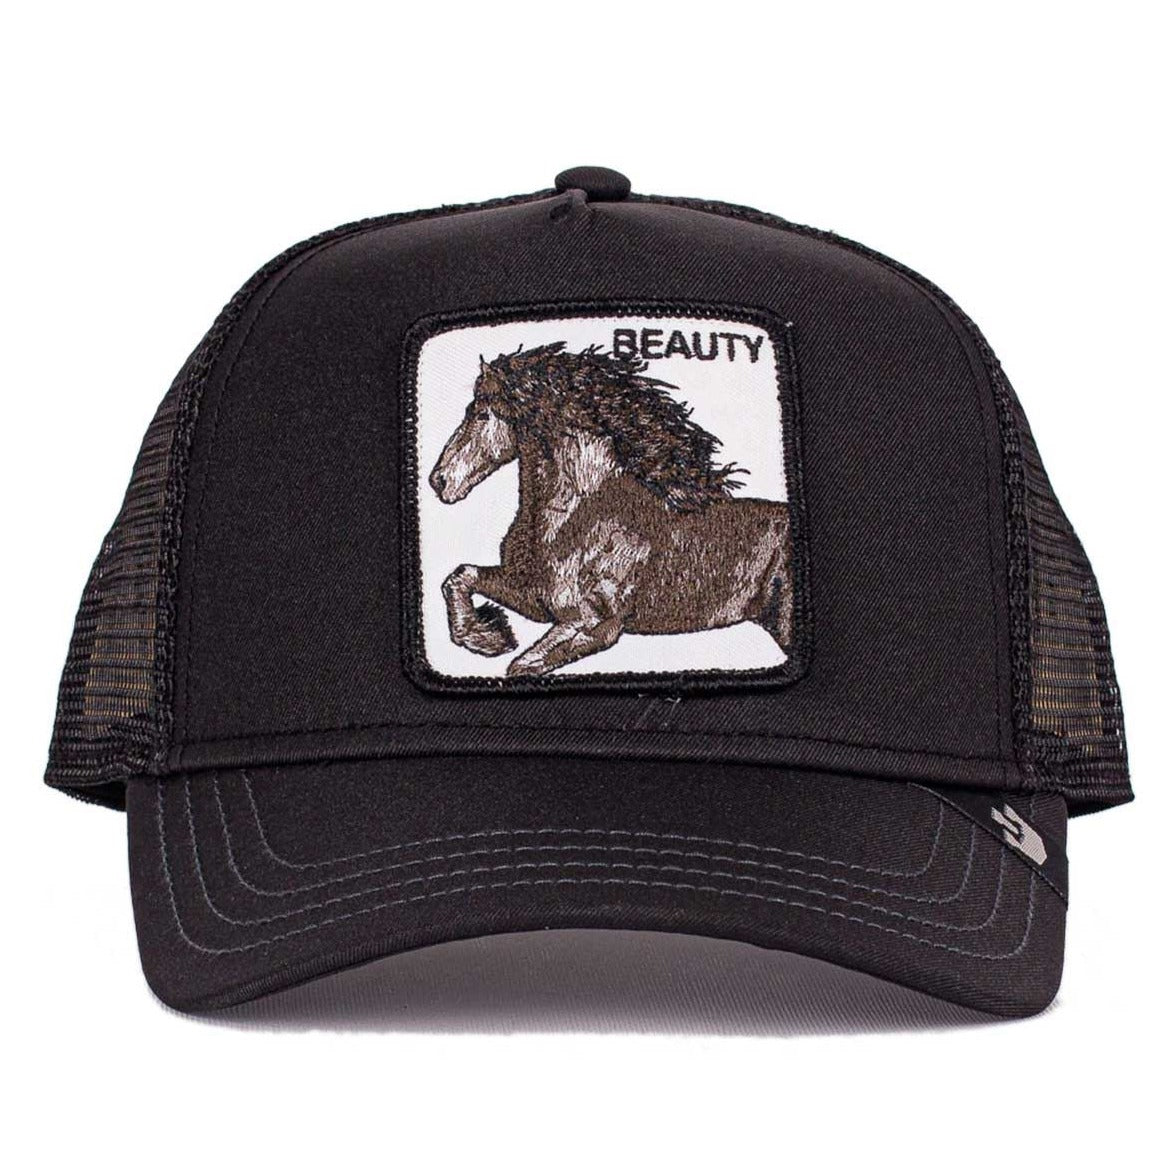 Goorin Bros Beauty כובע גורין סוס